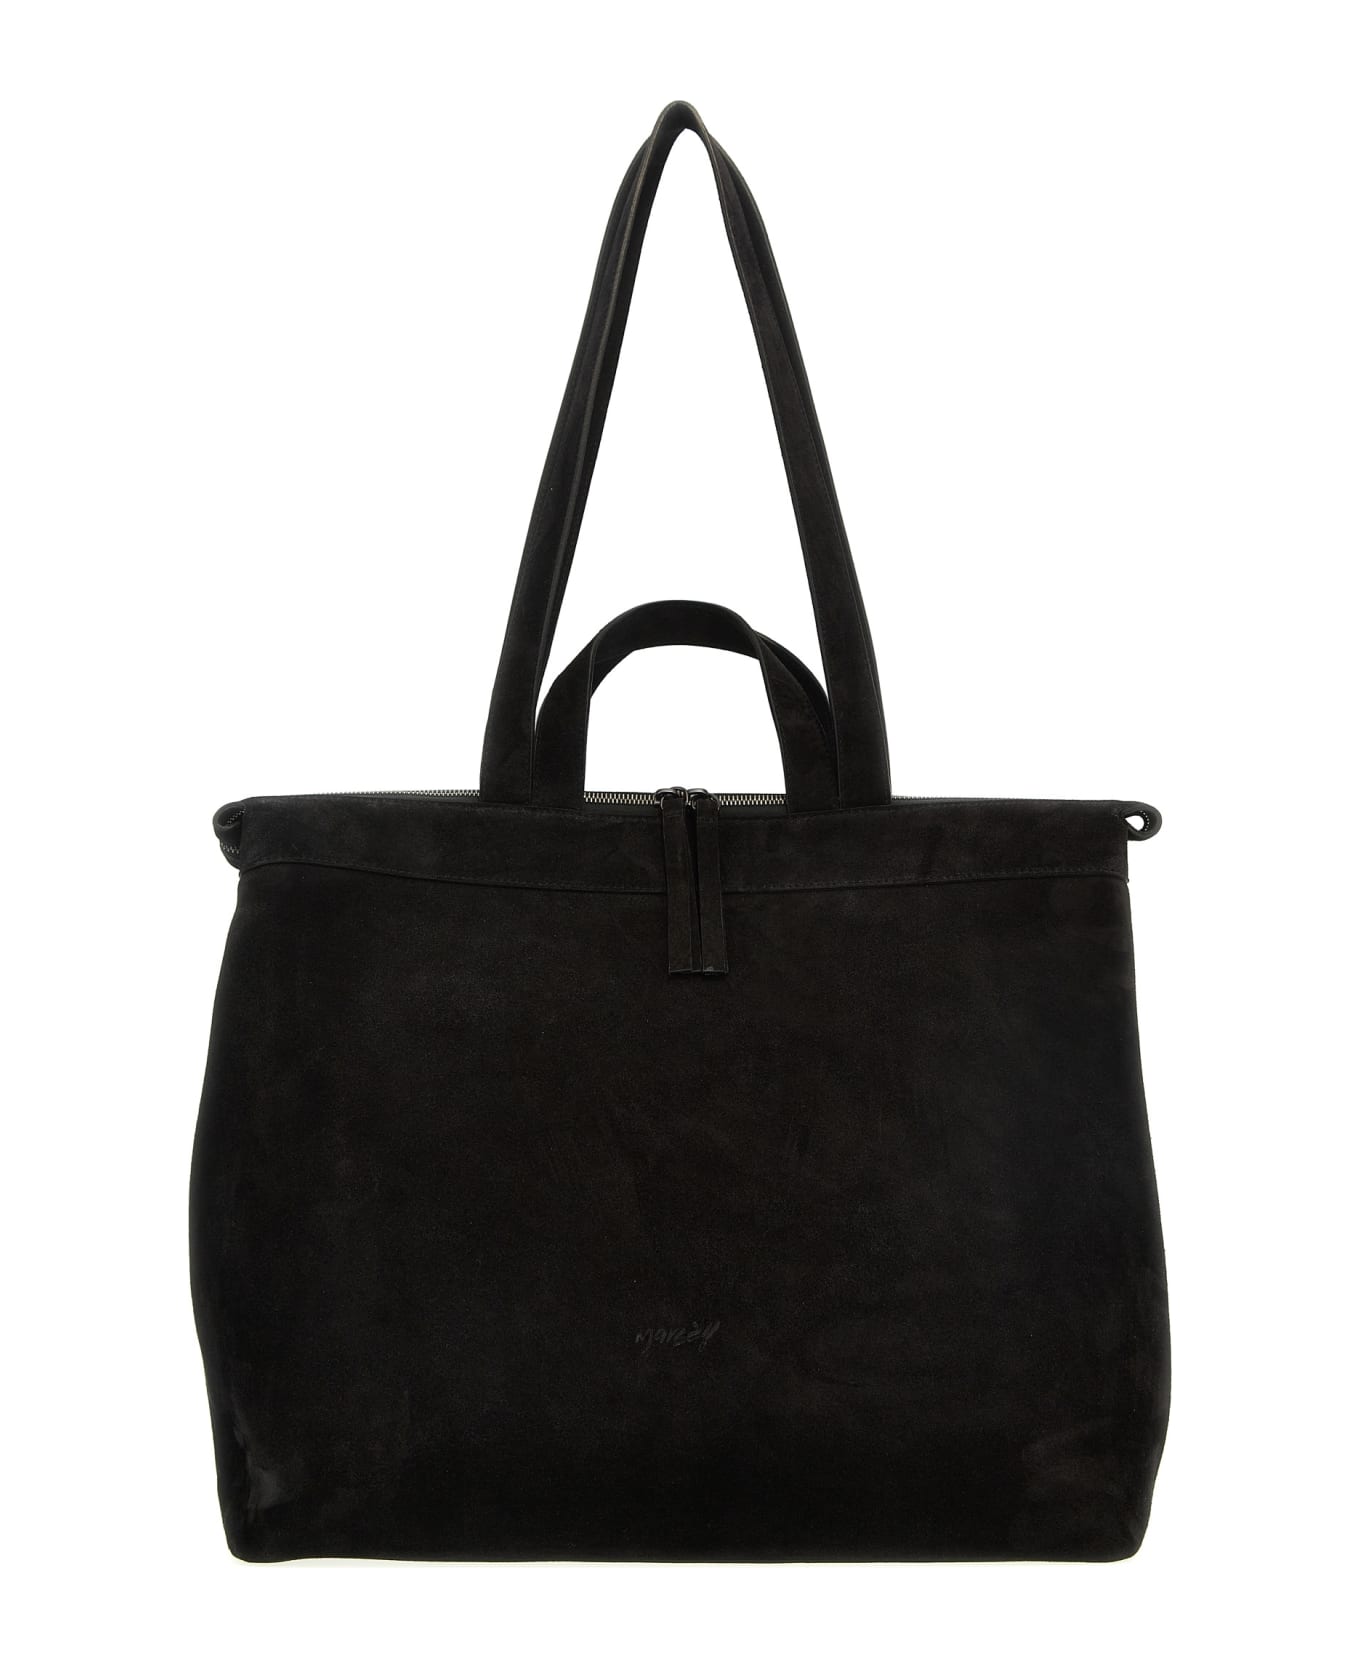 Marsell 'borso' Shopping Bag - Black   トートバッグ